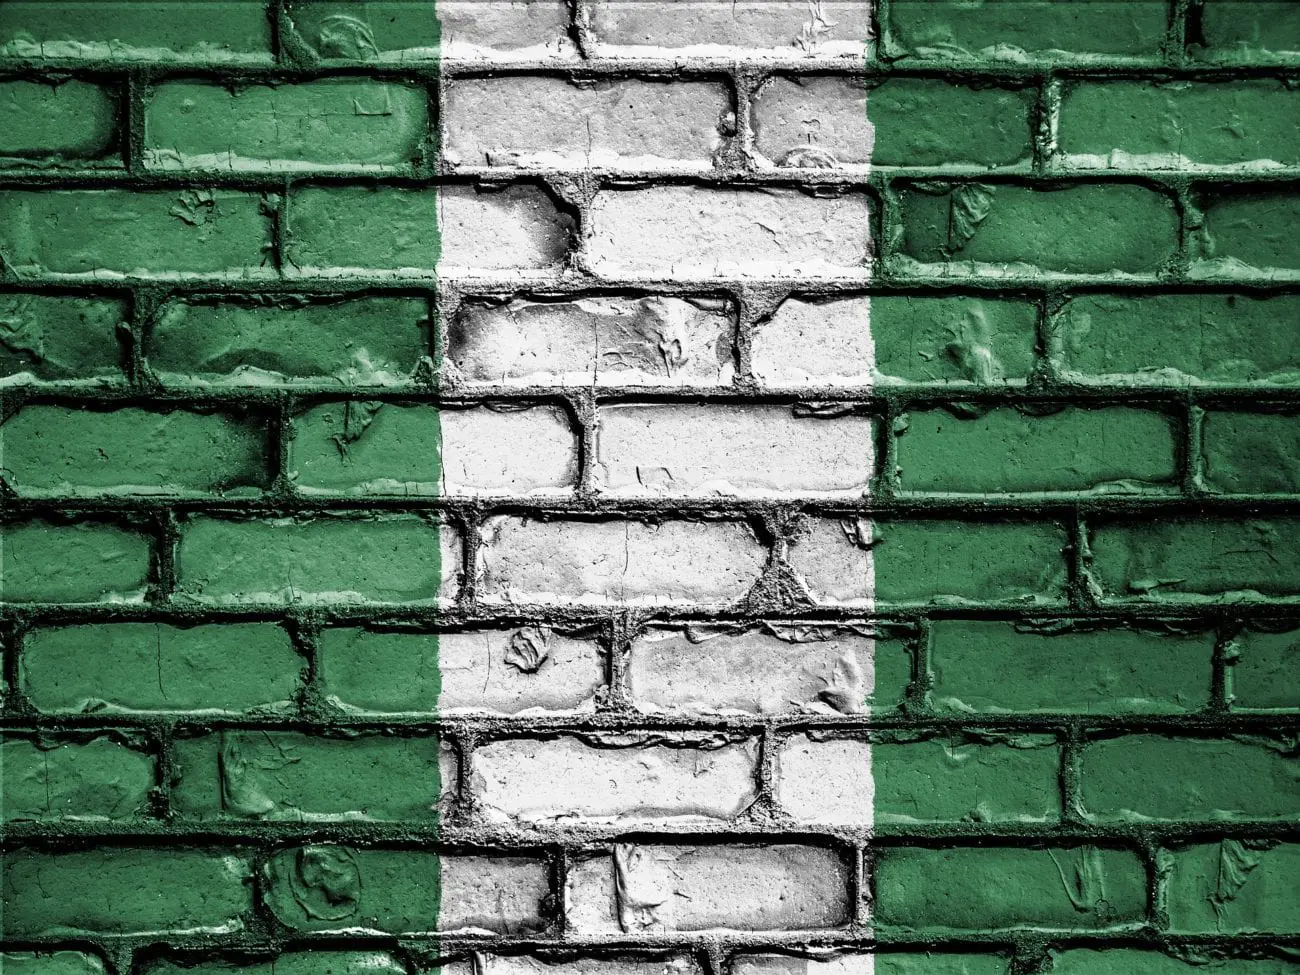 Nigeria-1-scaled